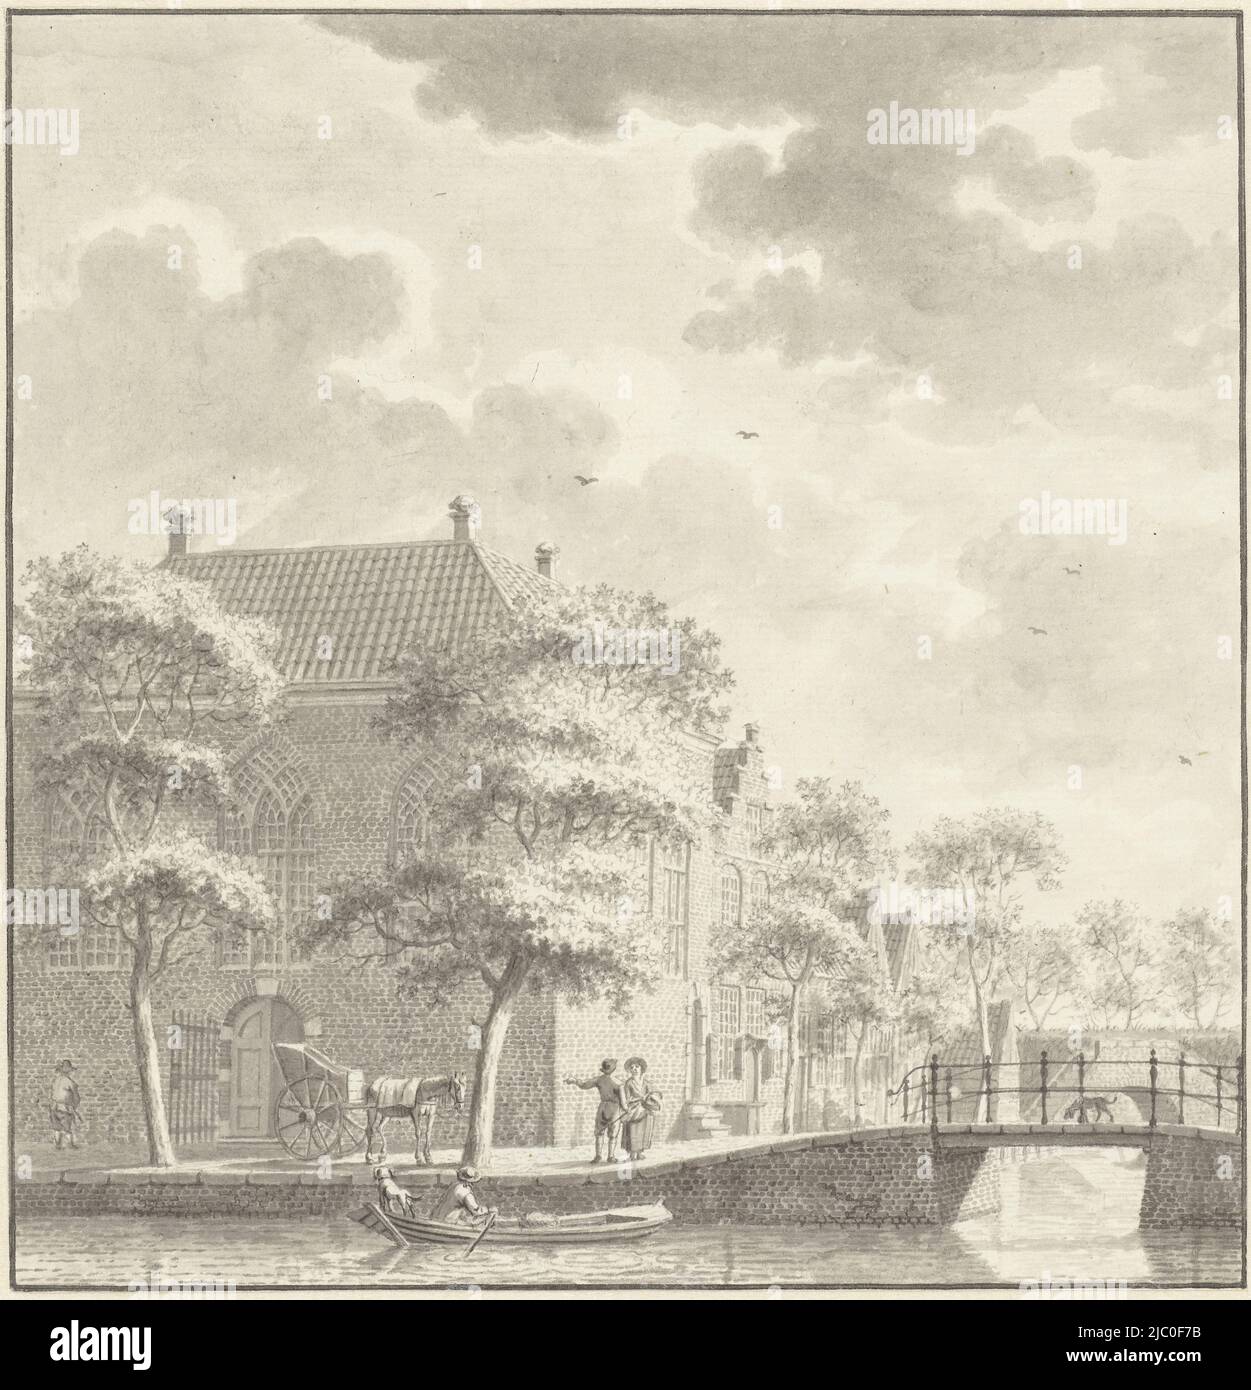 La iglesia luterana en Alkmaar, ponente: Isaac Ouwater, 1758 - 1793, papel, pluma, cepillo de 222 mm de alto x 215 mm de ancho Foto de stock